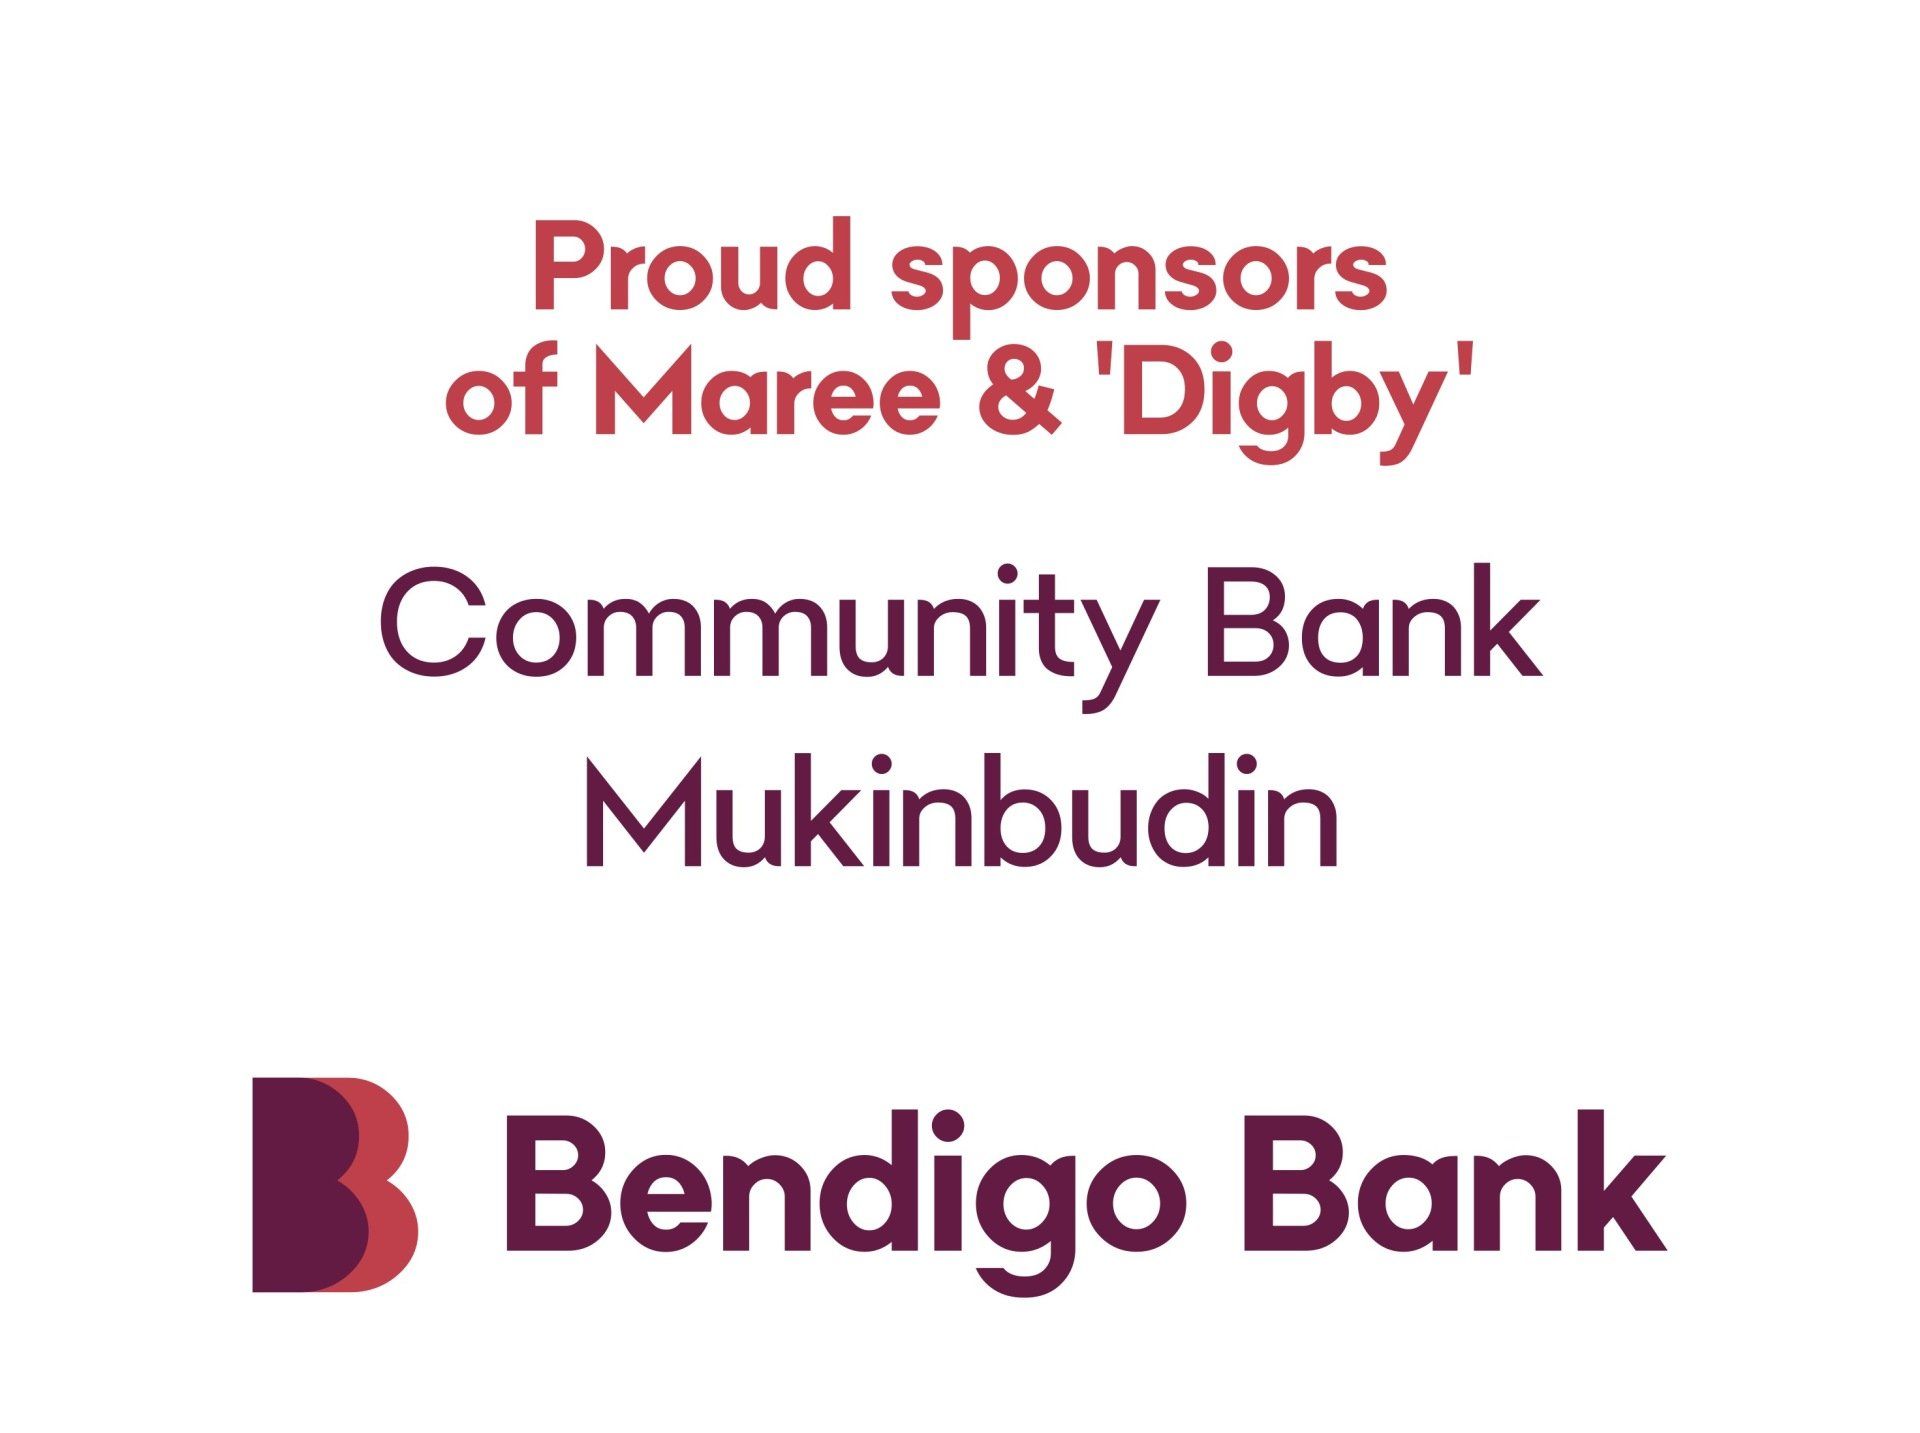 Community Bank Mukinbudin